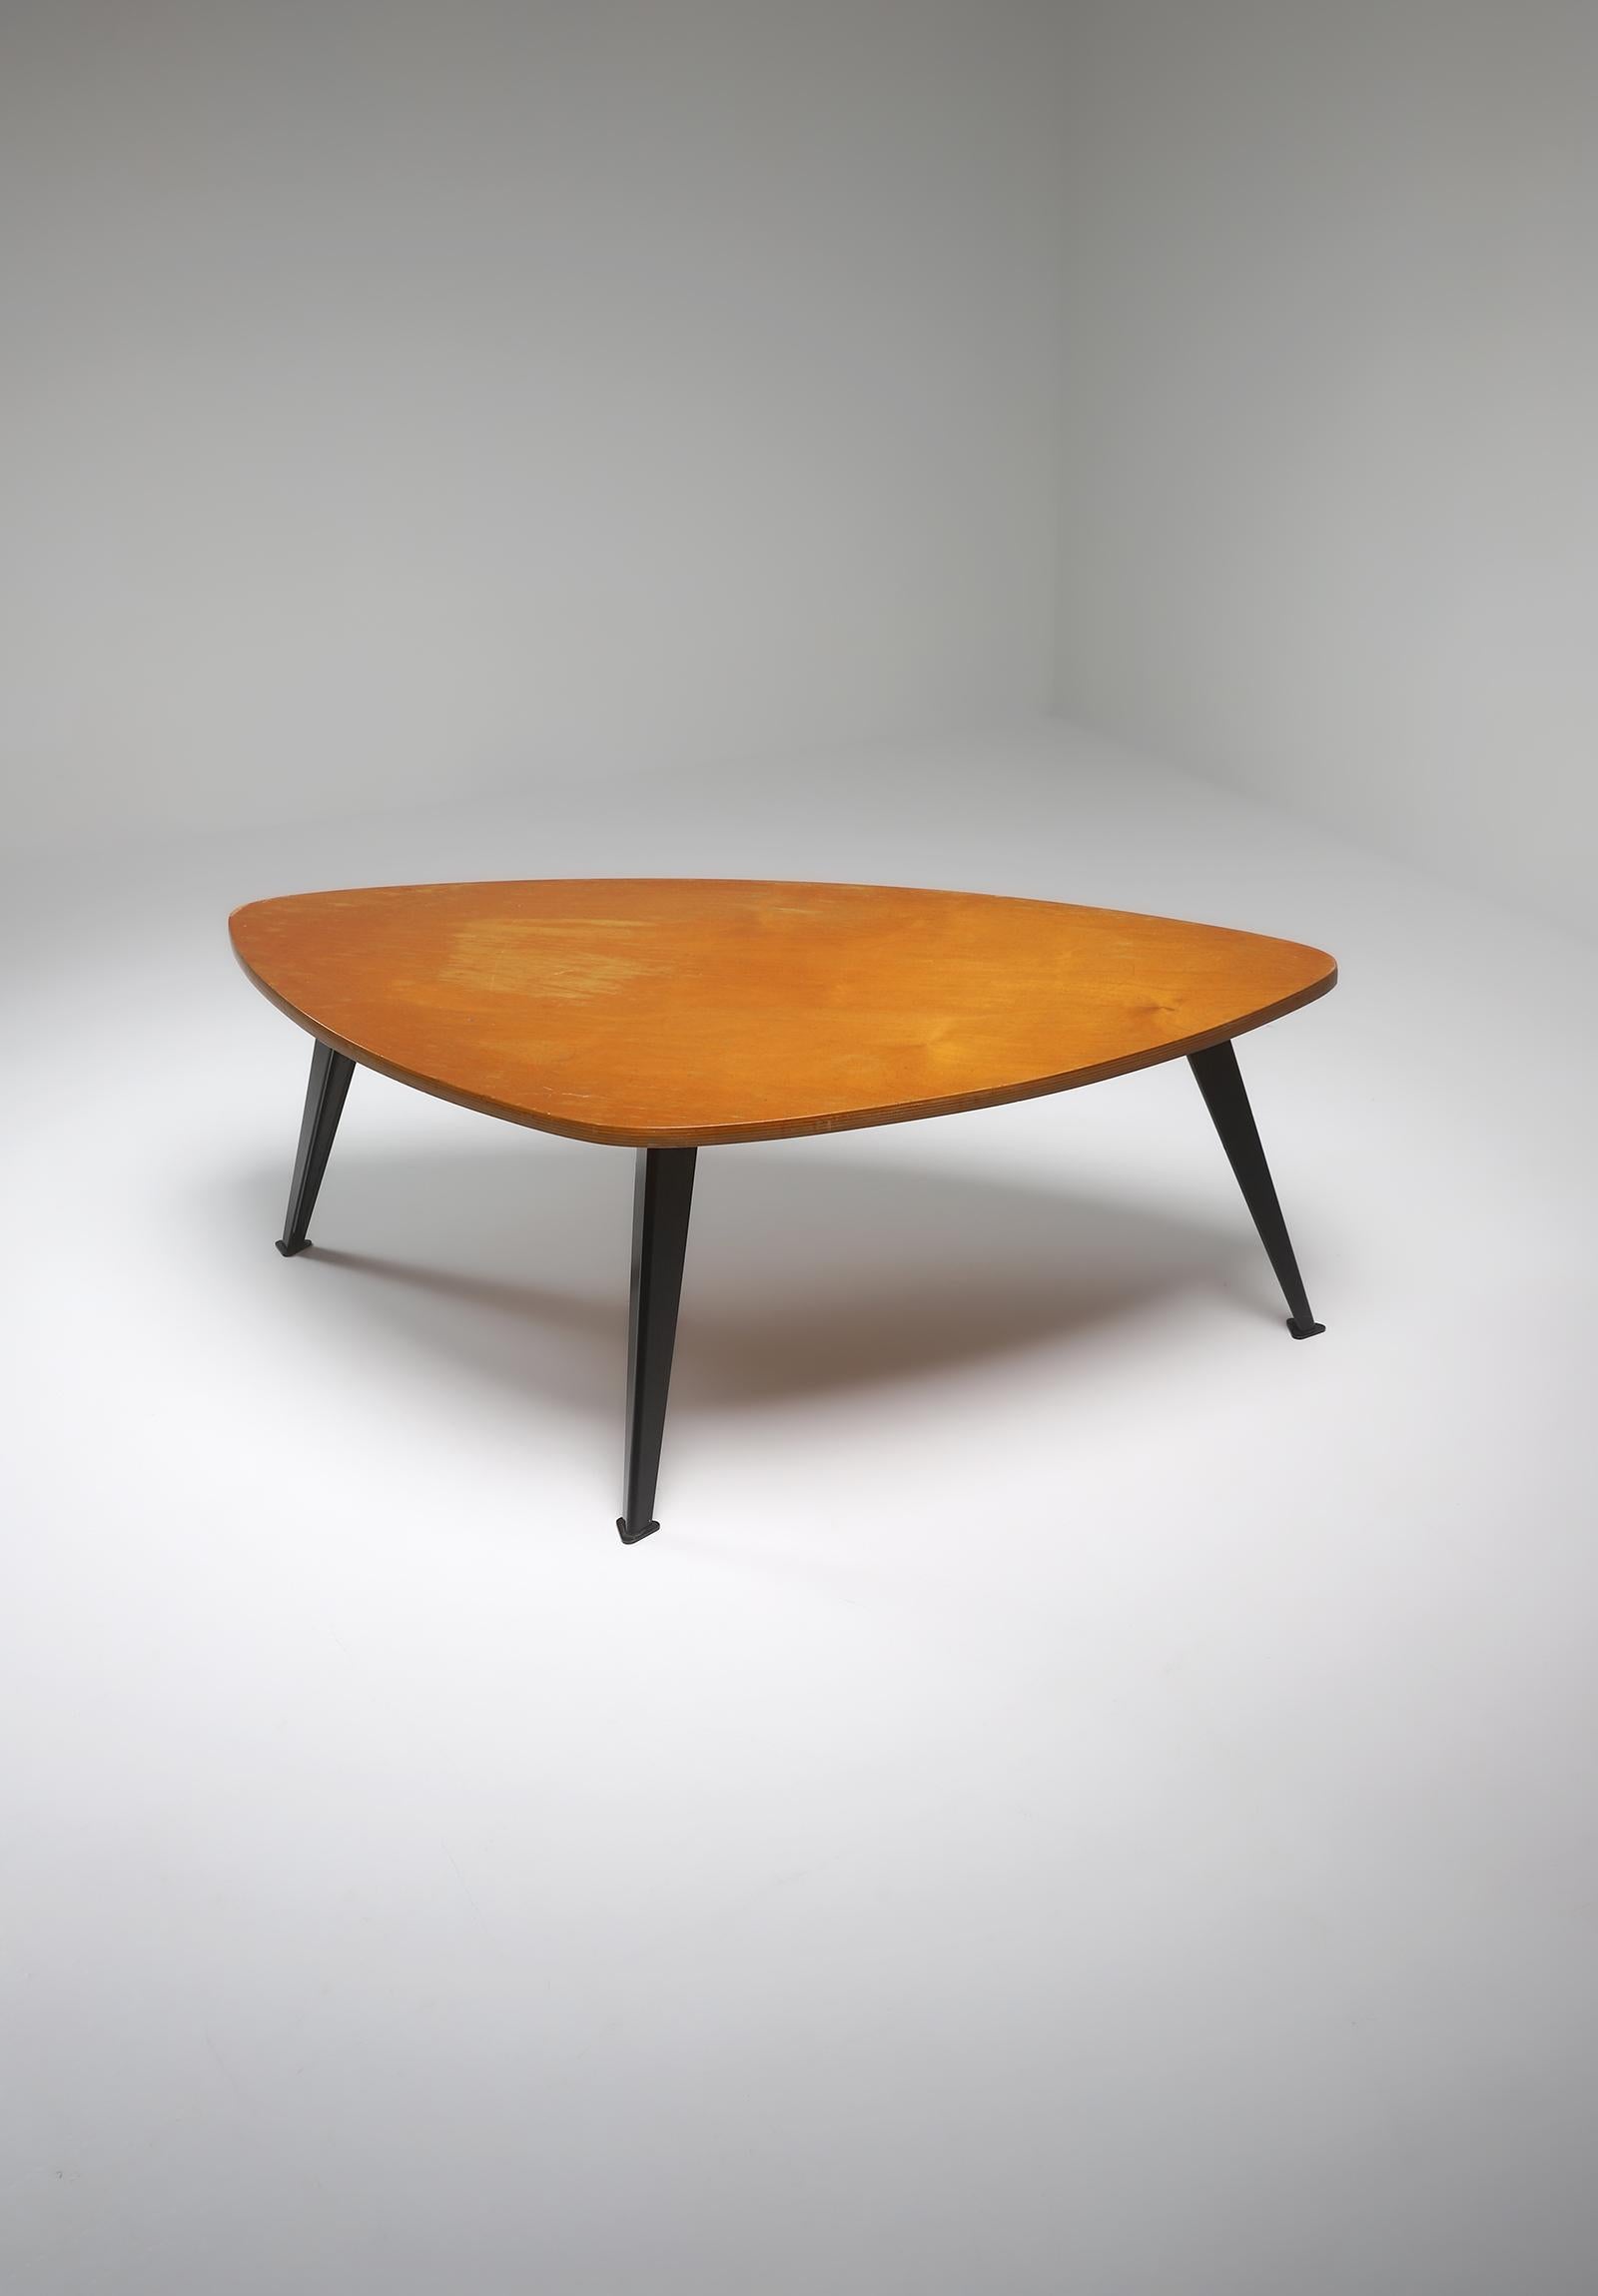 Mid-20th Century Mid-century modern wooden Coffee Table by Willy Van Der Meeren 1950s